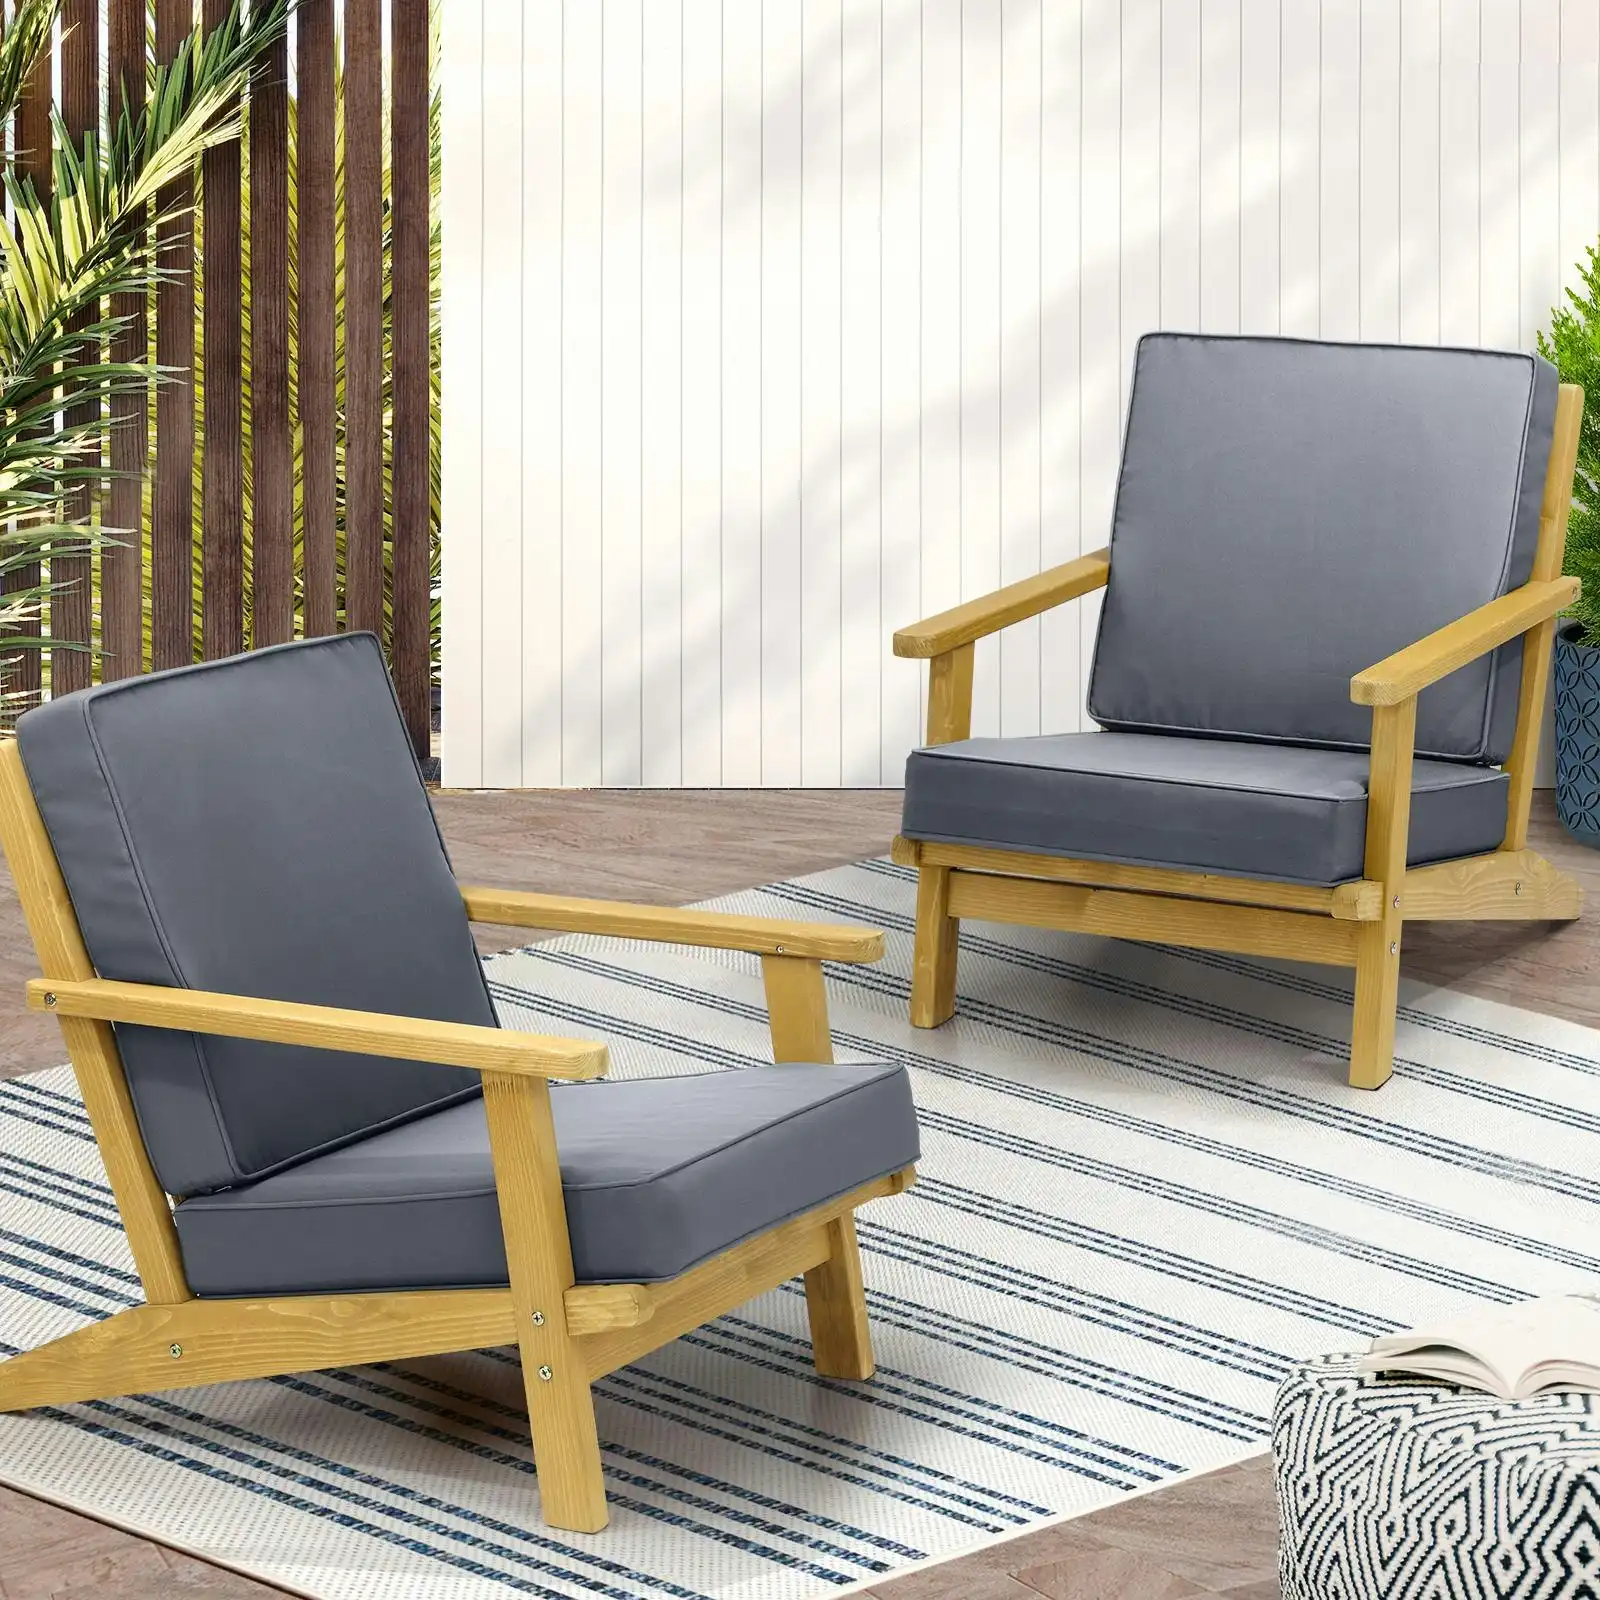 Livsip 2x Outdoor Armchair Furniture Sun Lounge Wooden Chairs Patio Garden Sofa